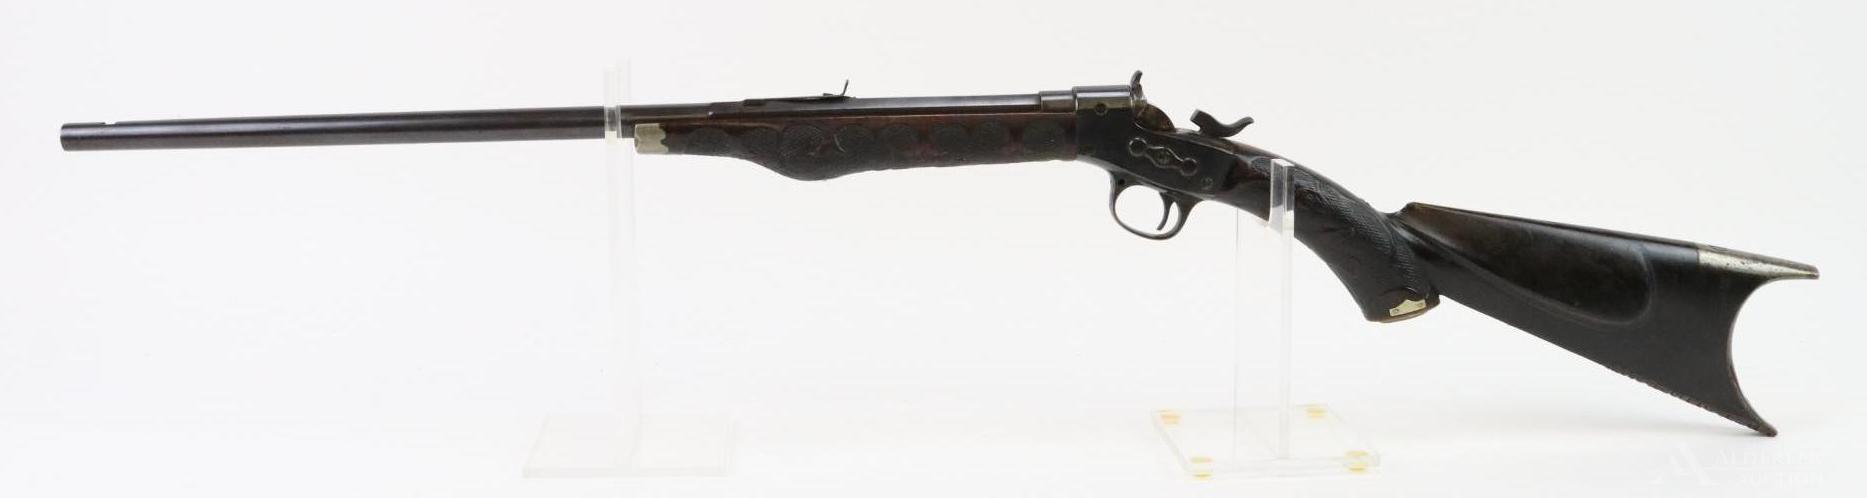 Remington #4 single shot rolling block rifle.